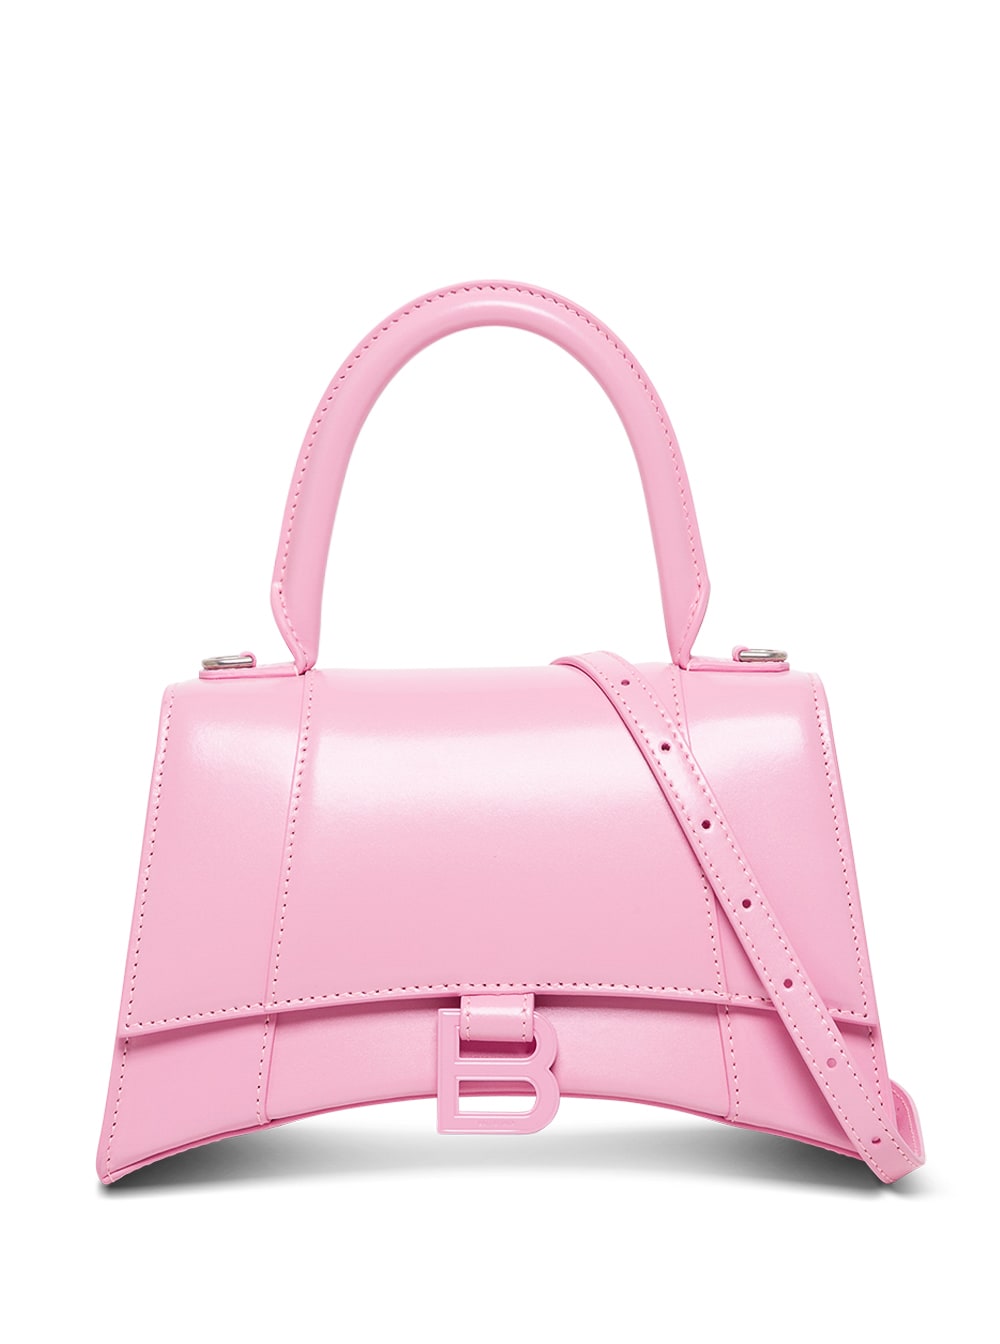 Balenciaga Hourglass Handbag In Pink Leather